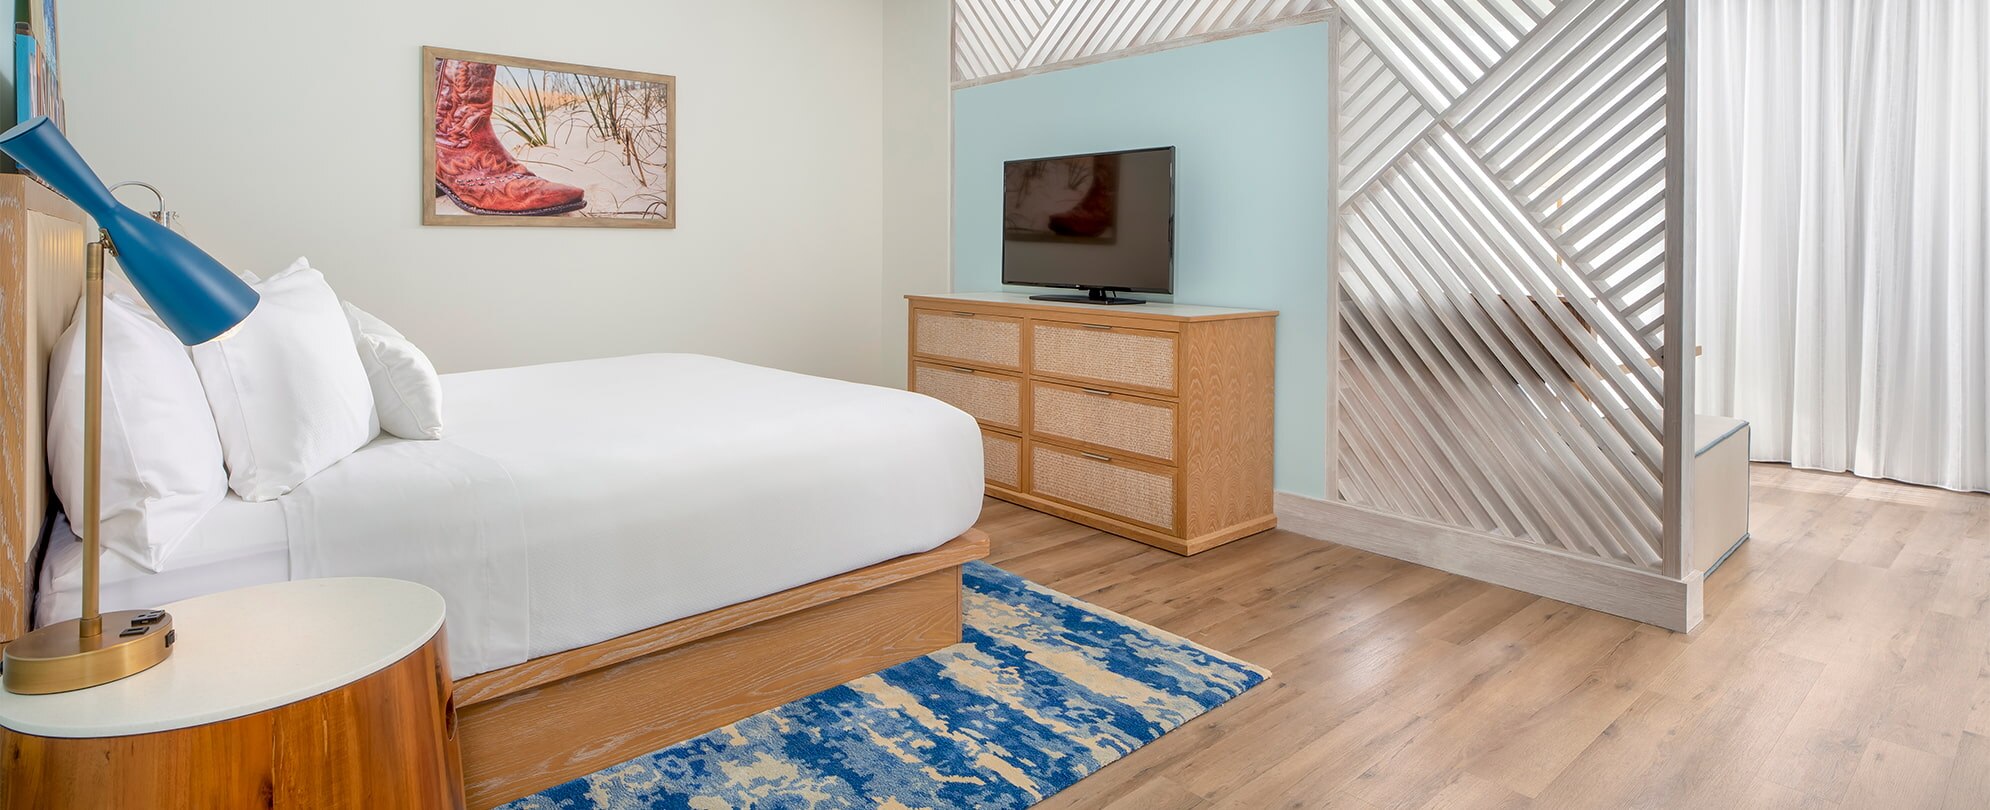 A Margaritaville Vacation Club Studio suite bedroom at the Nashville, TN resort.